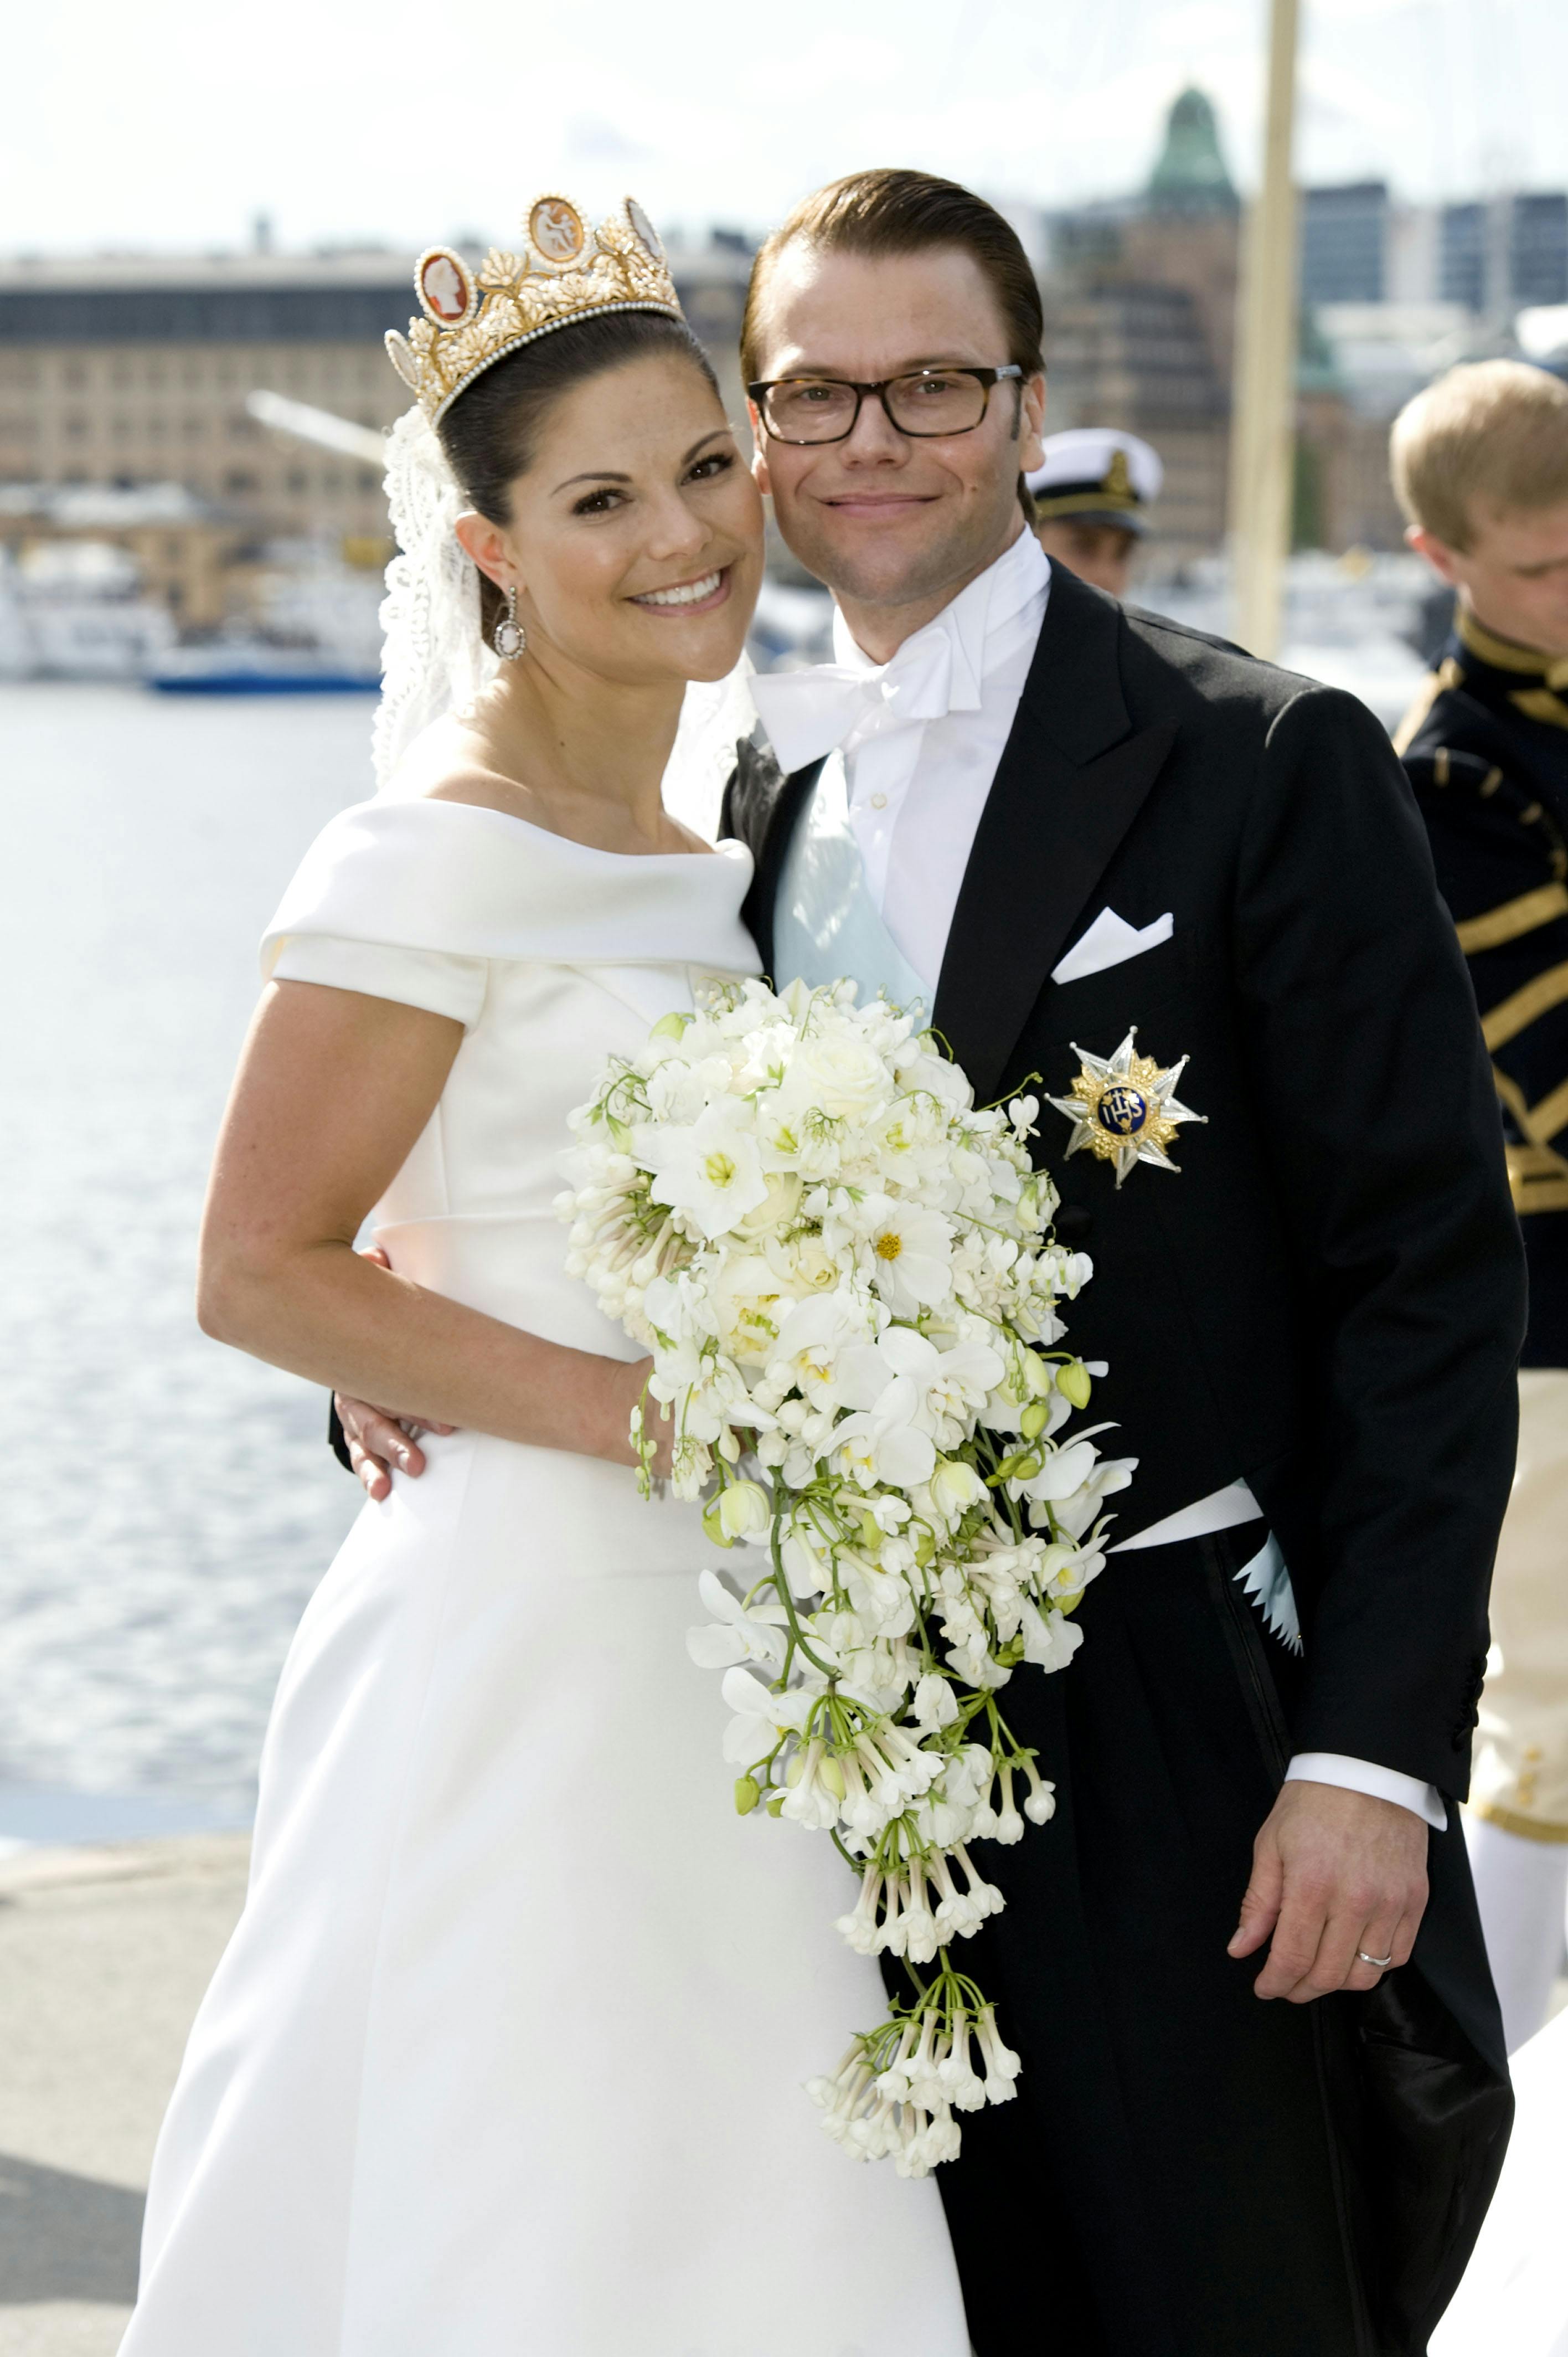 Kronprinsesse Victoria og prins Daniel ved brylluppet den 19. juni 2010.&nbsp;
